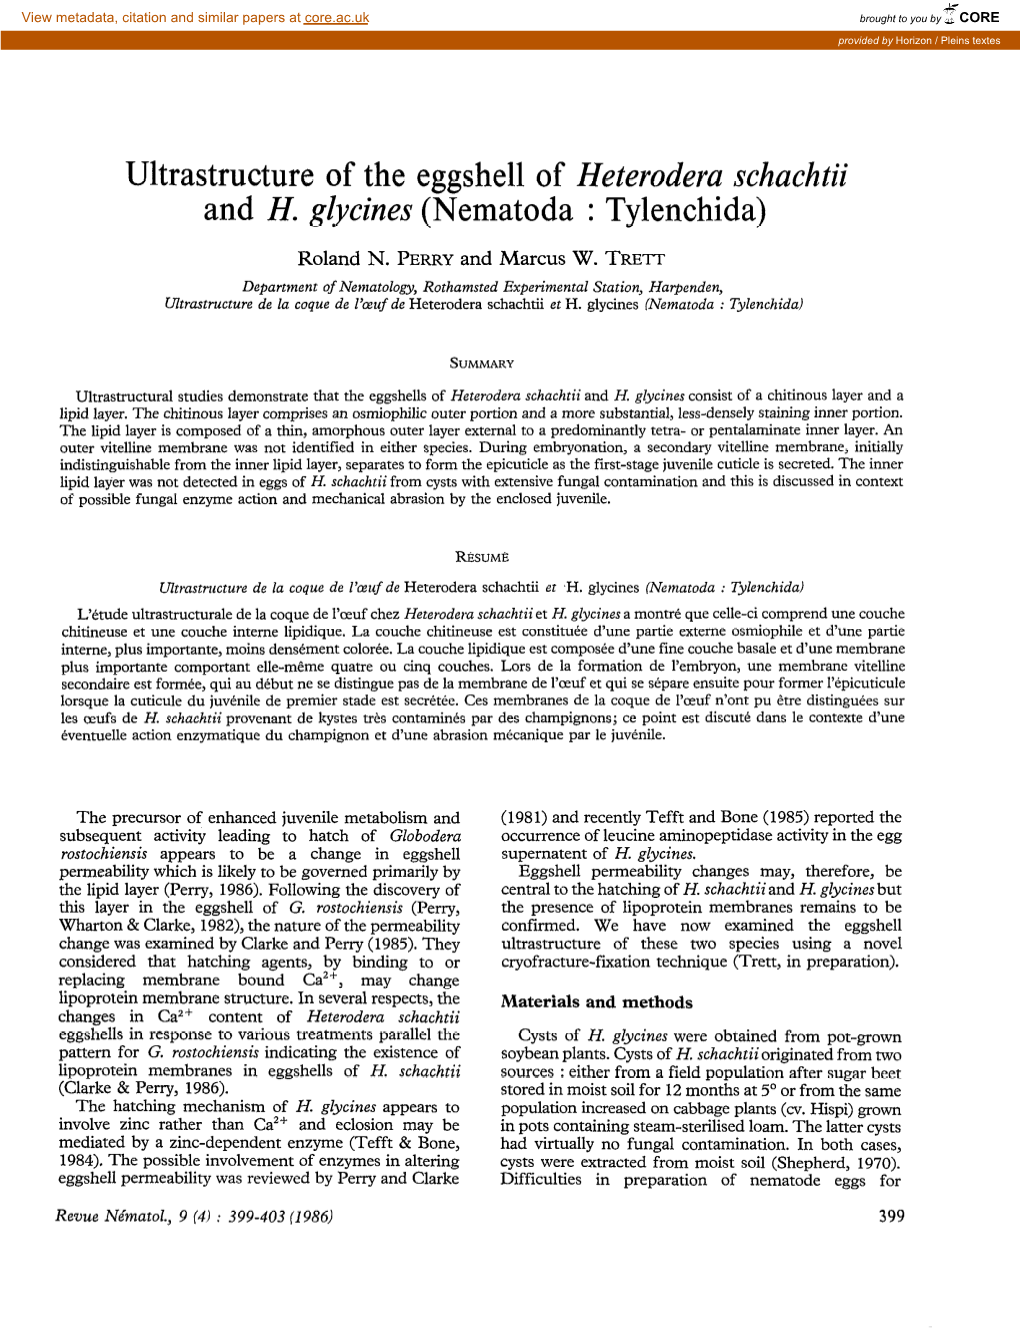 Ultrastructure of the Eggshell of Heterodera Schachtii and H